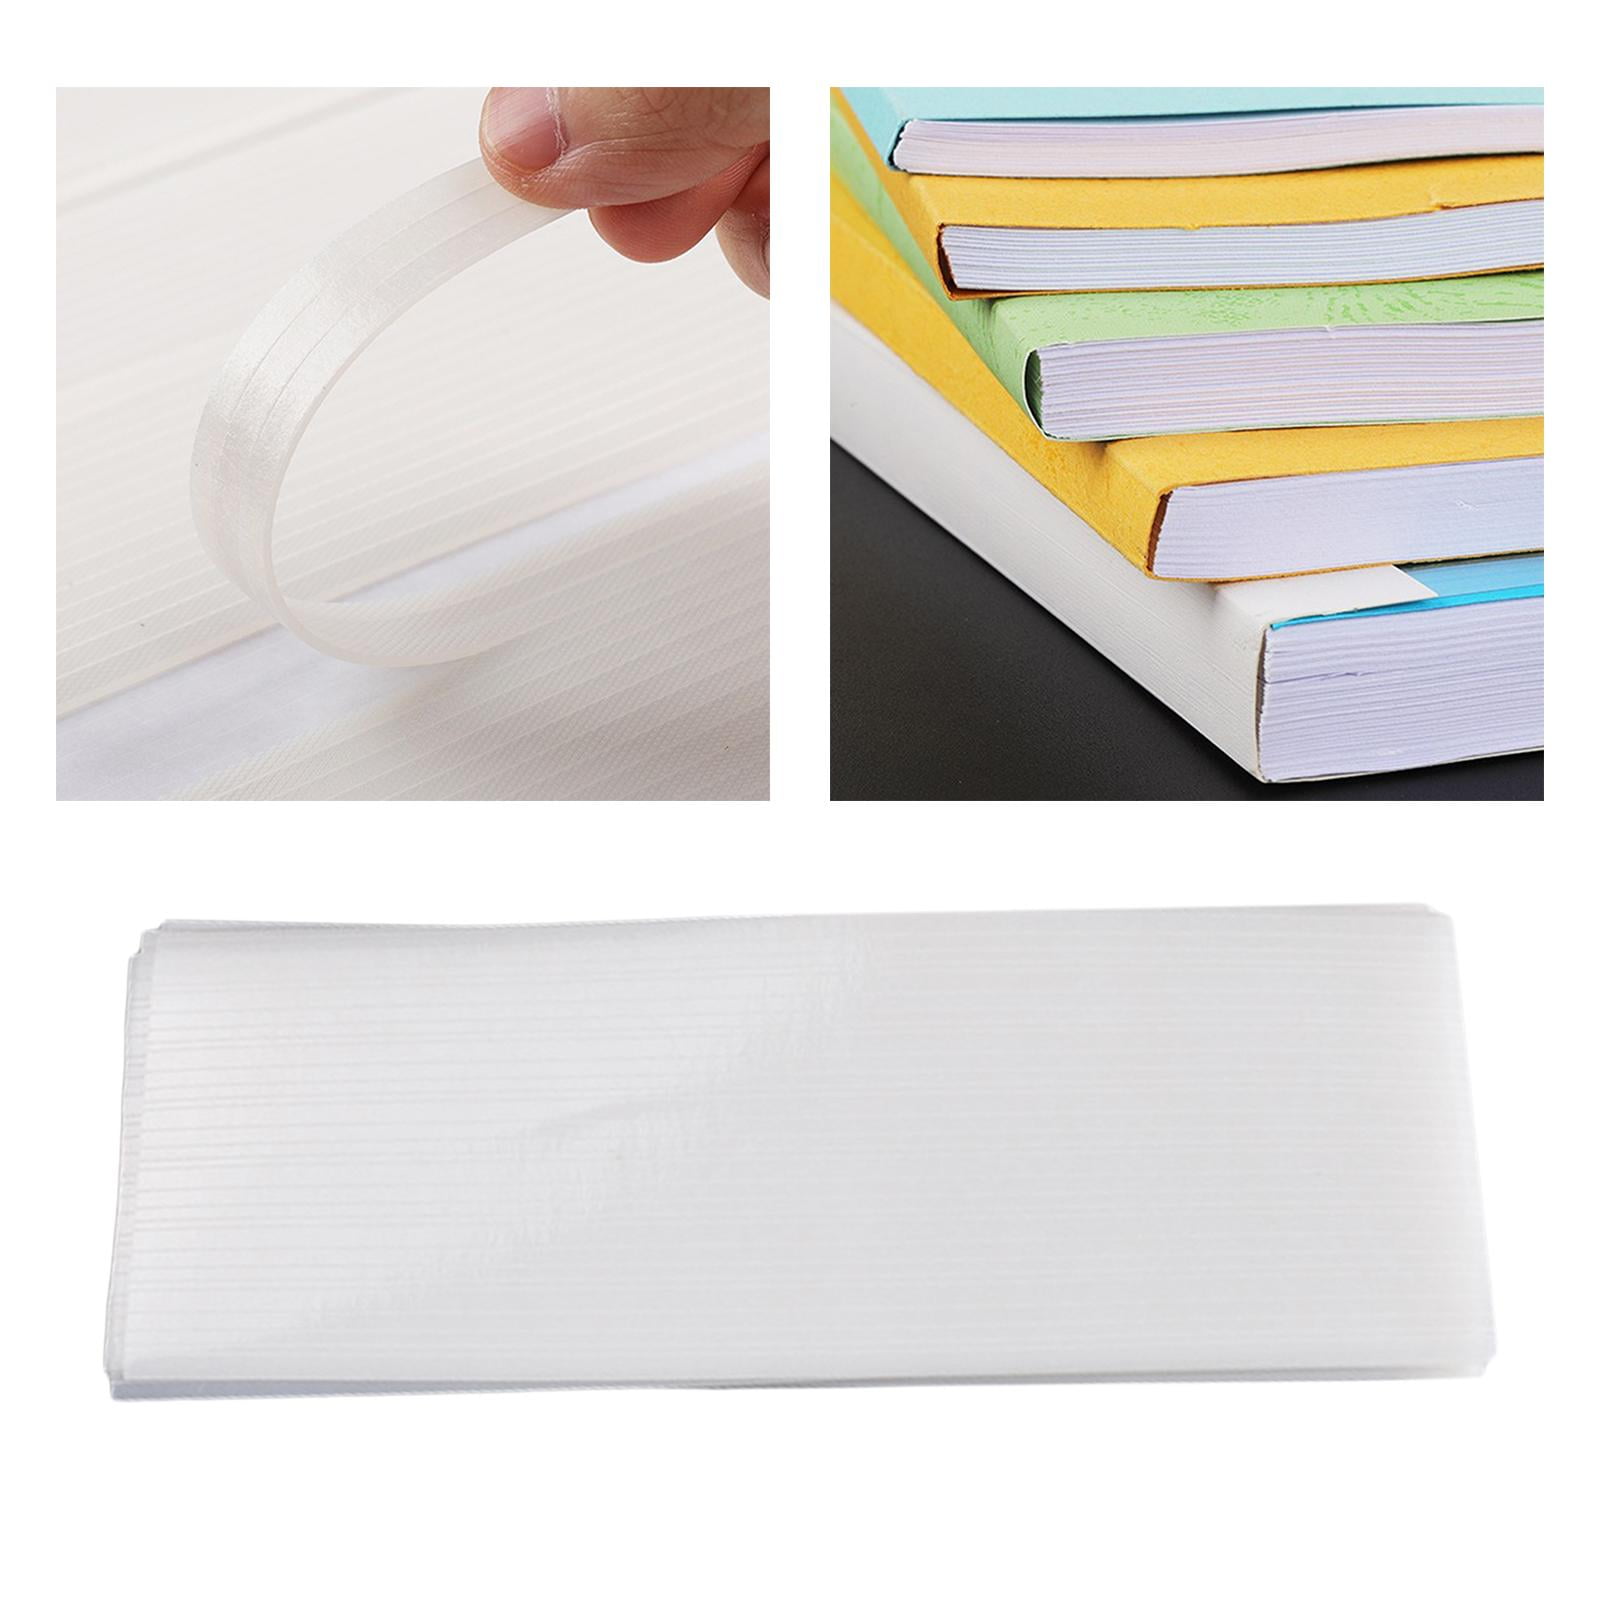 15g/50g/80g Book Binding Adhesive Book Binding Glue Glue Book